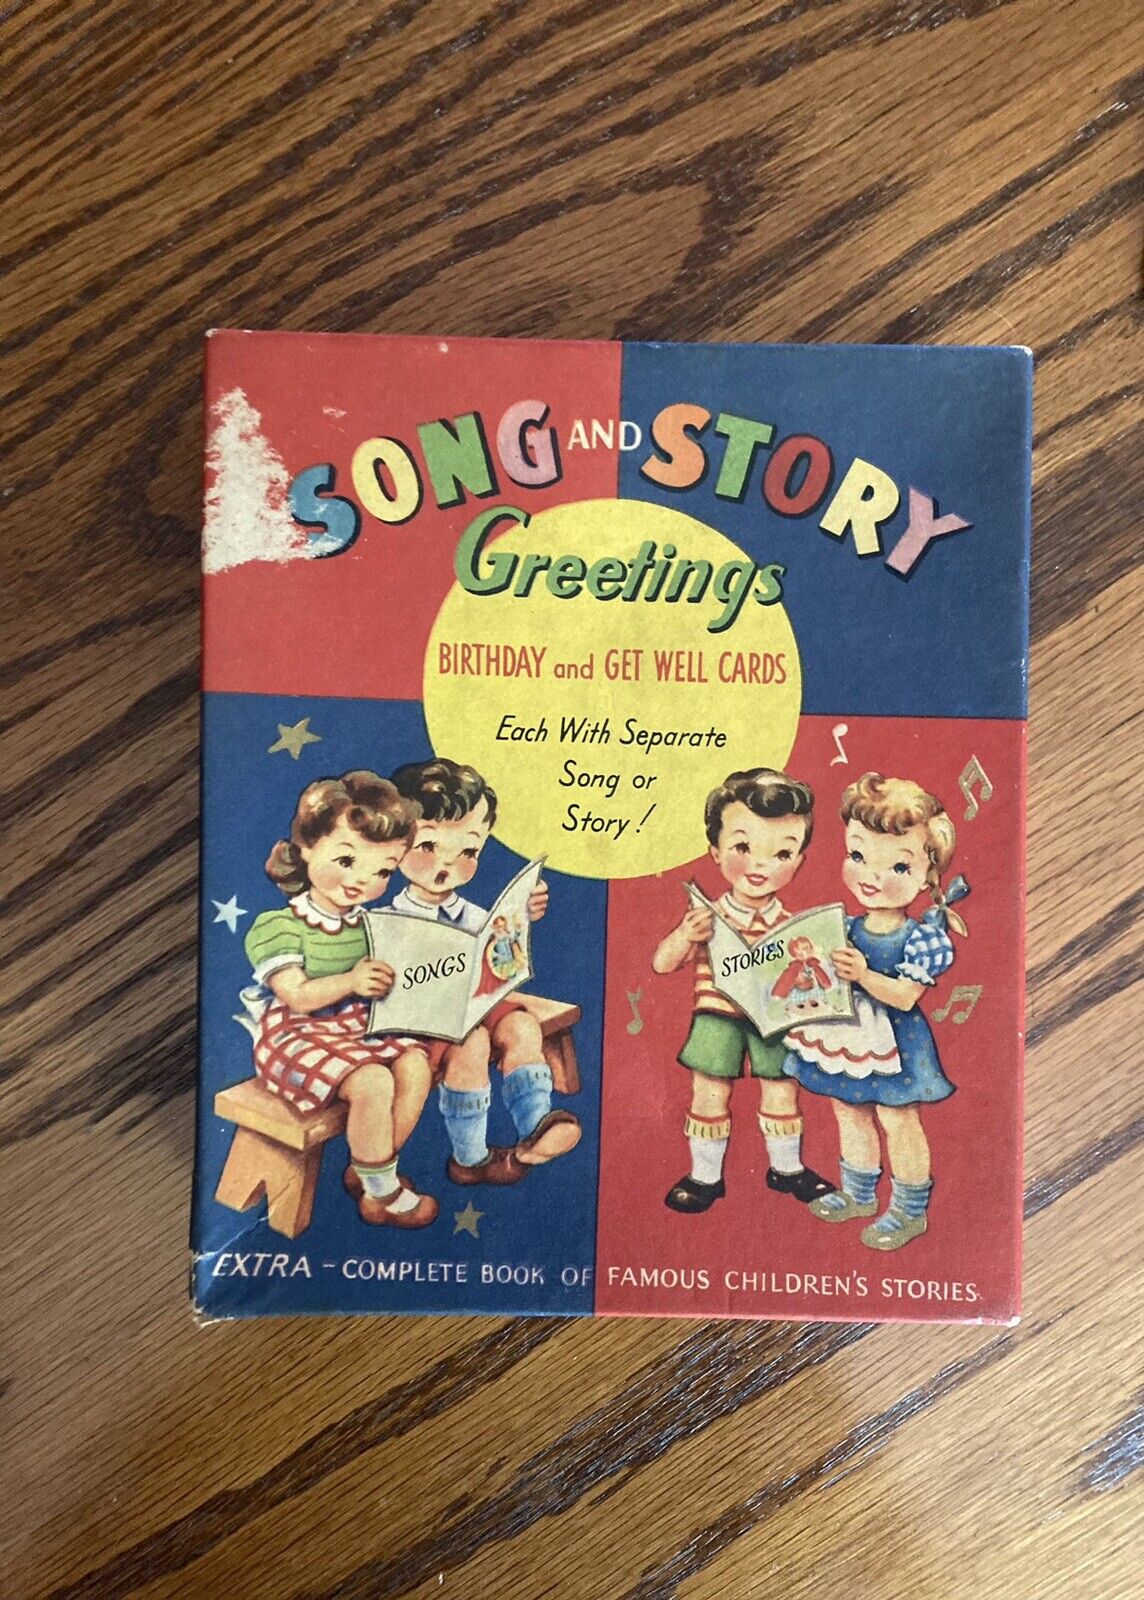 ANTIQUE STORYBOOK  GREETING CARDS   - 1950’s ORIGINAL